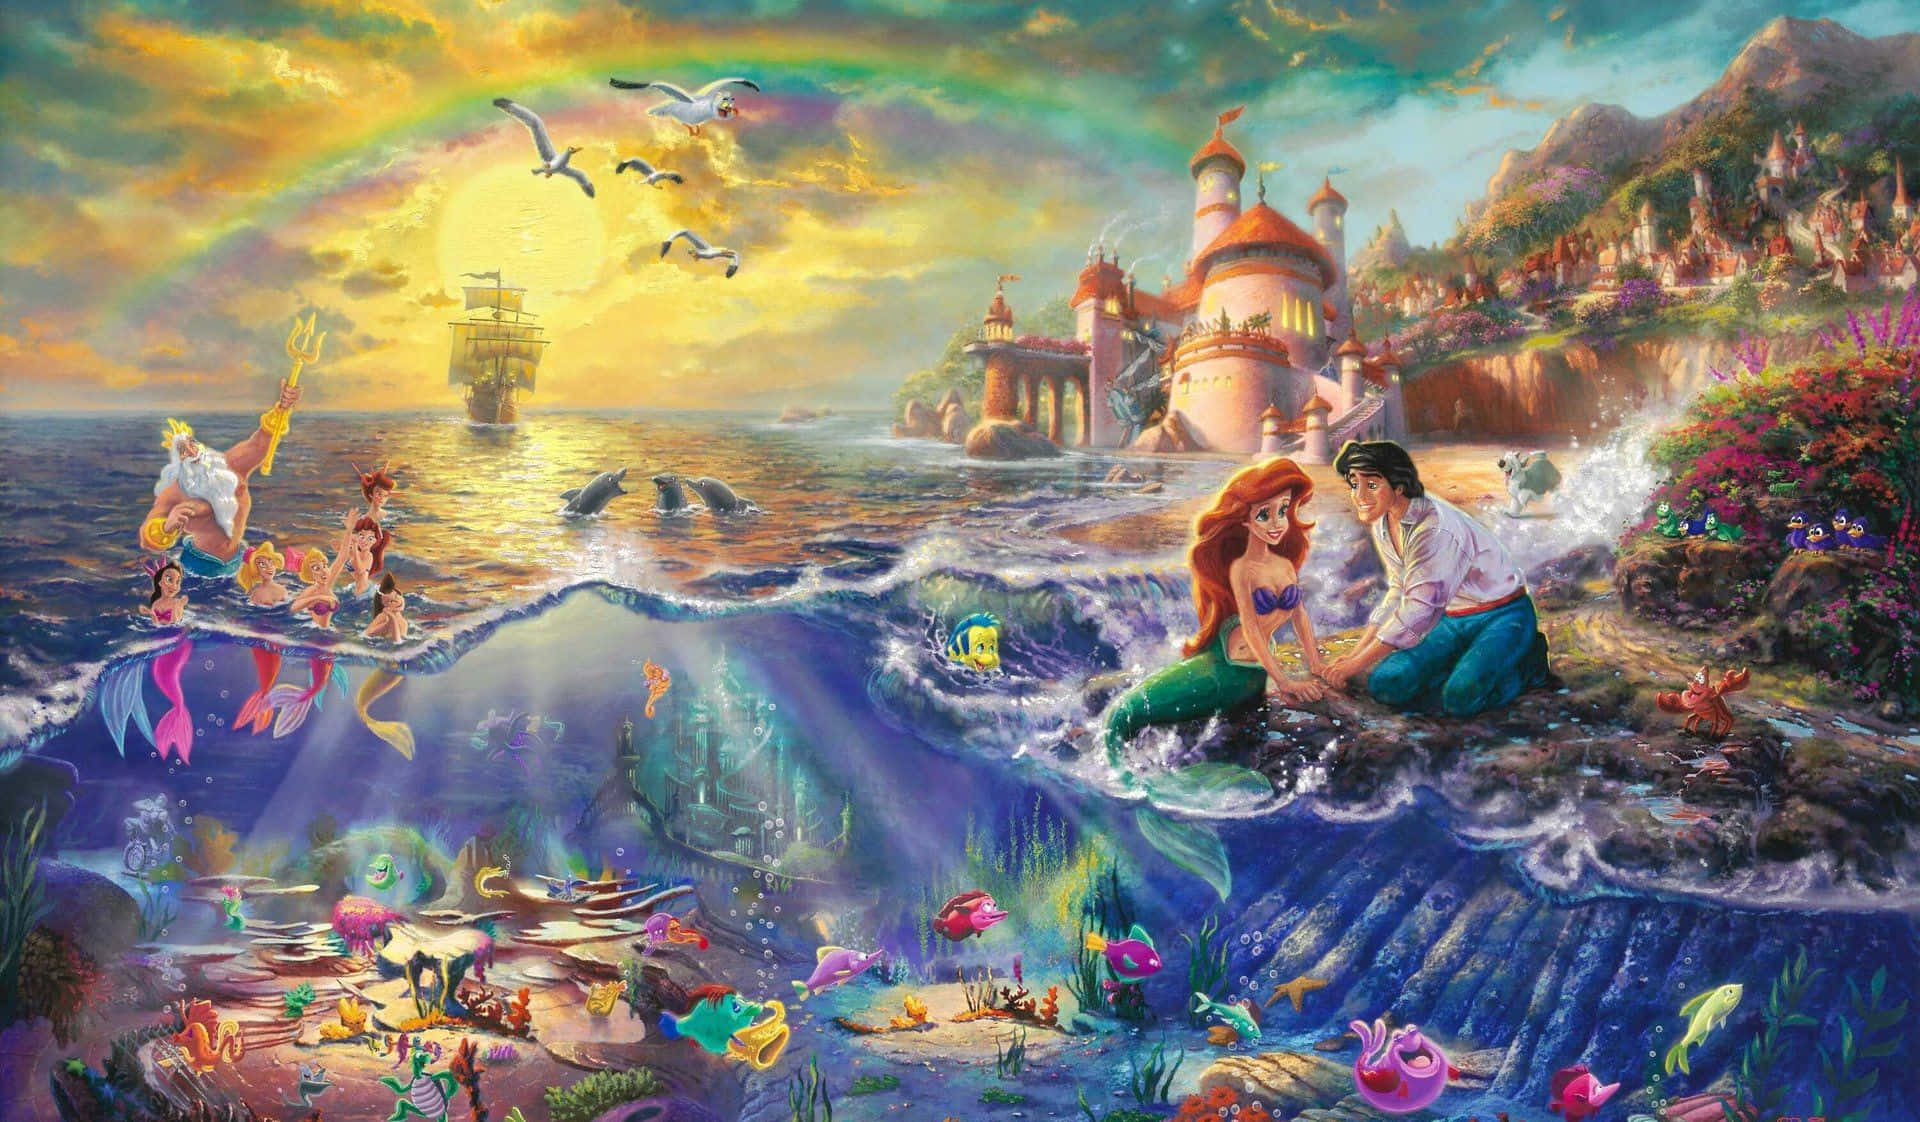 Arielfrån Disney's Lilla Sjöjungfrun. Wallpaper